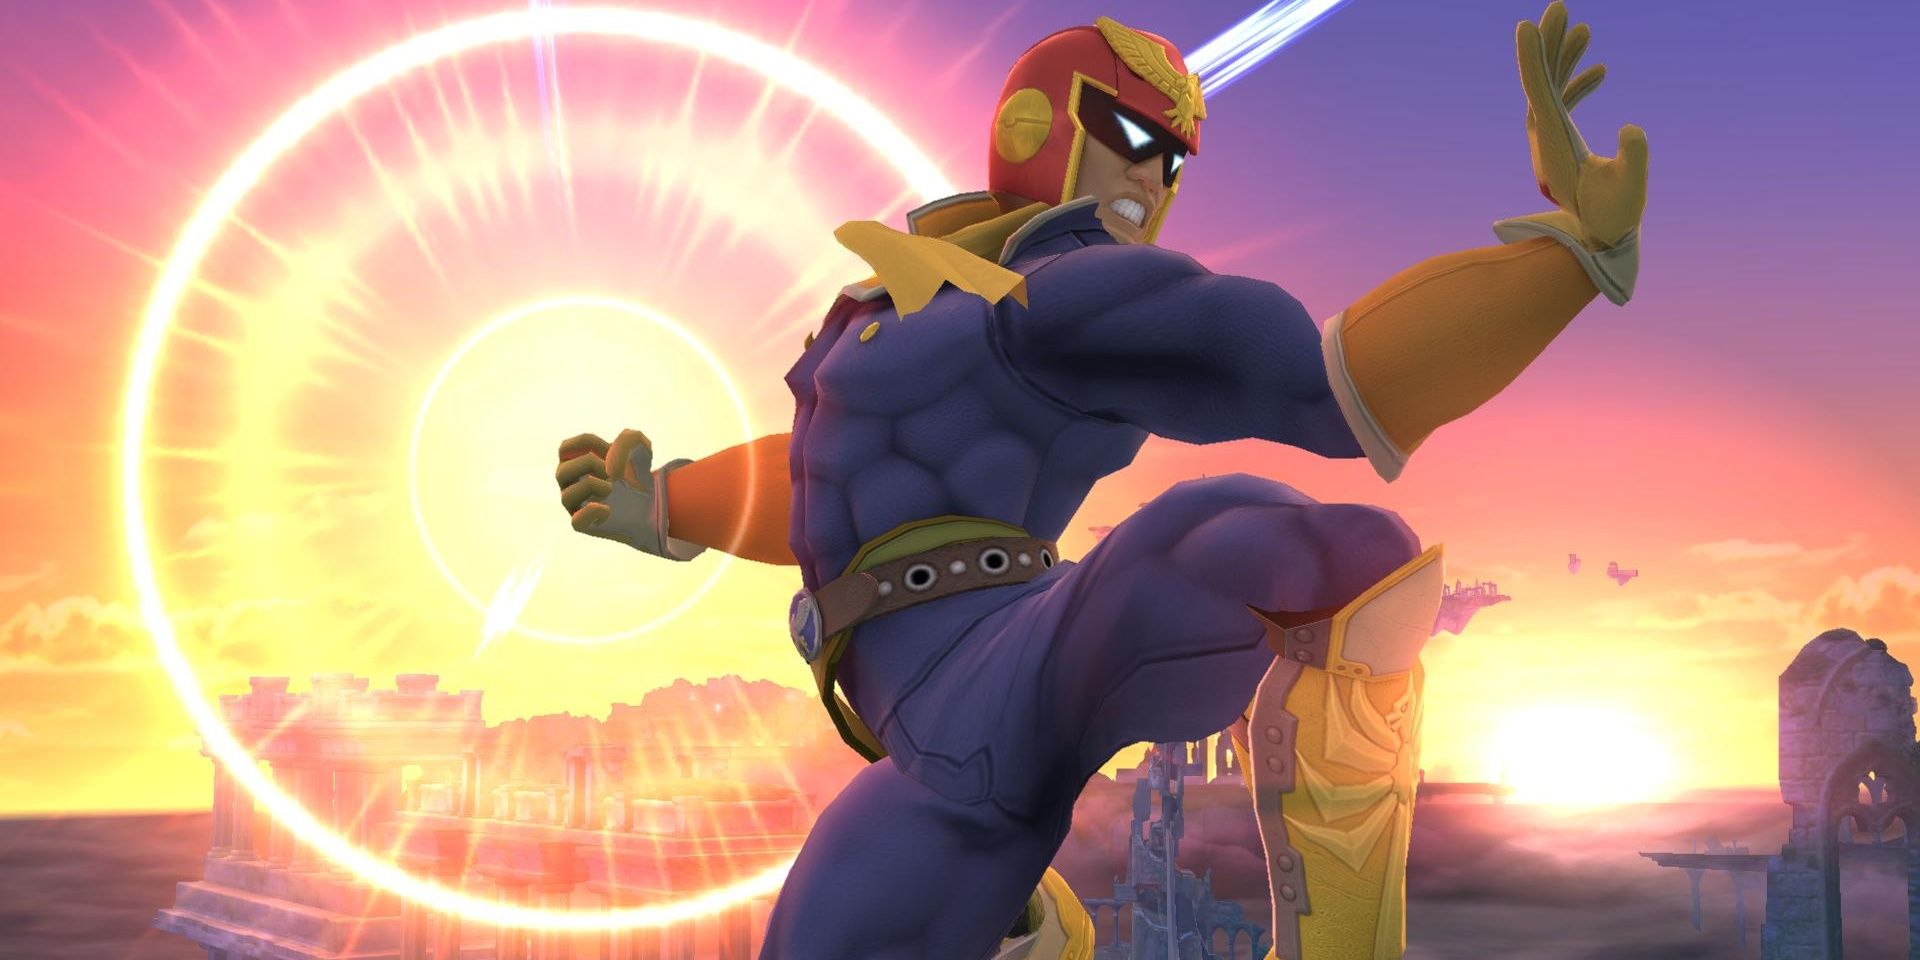 Captain Falcon in Super Smash Bros. doing the iconic Falcon Punch